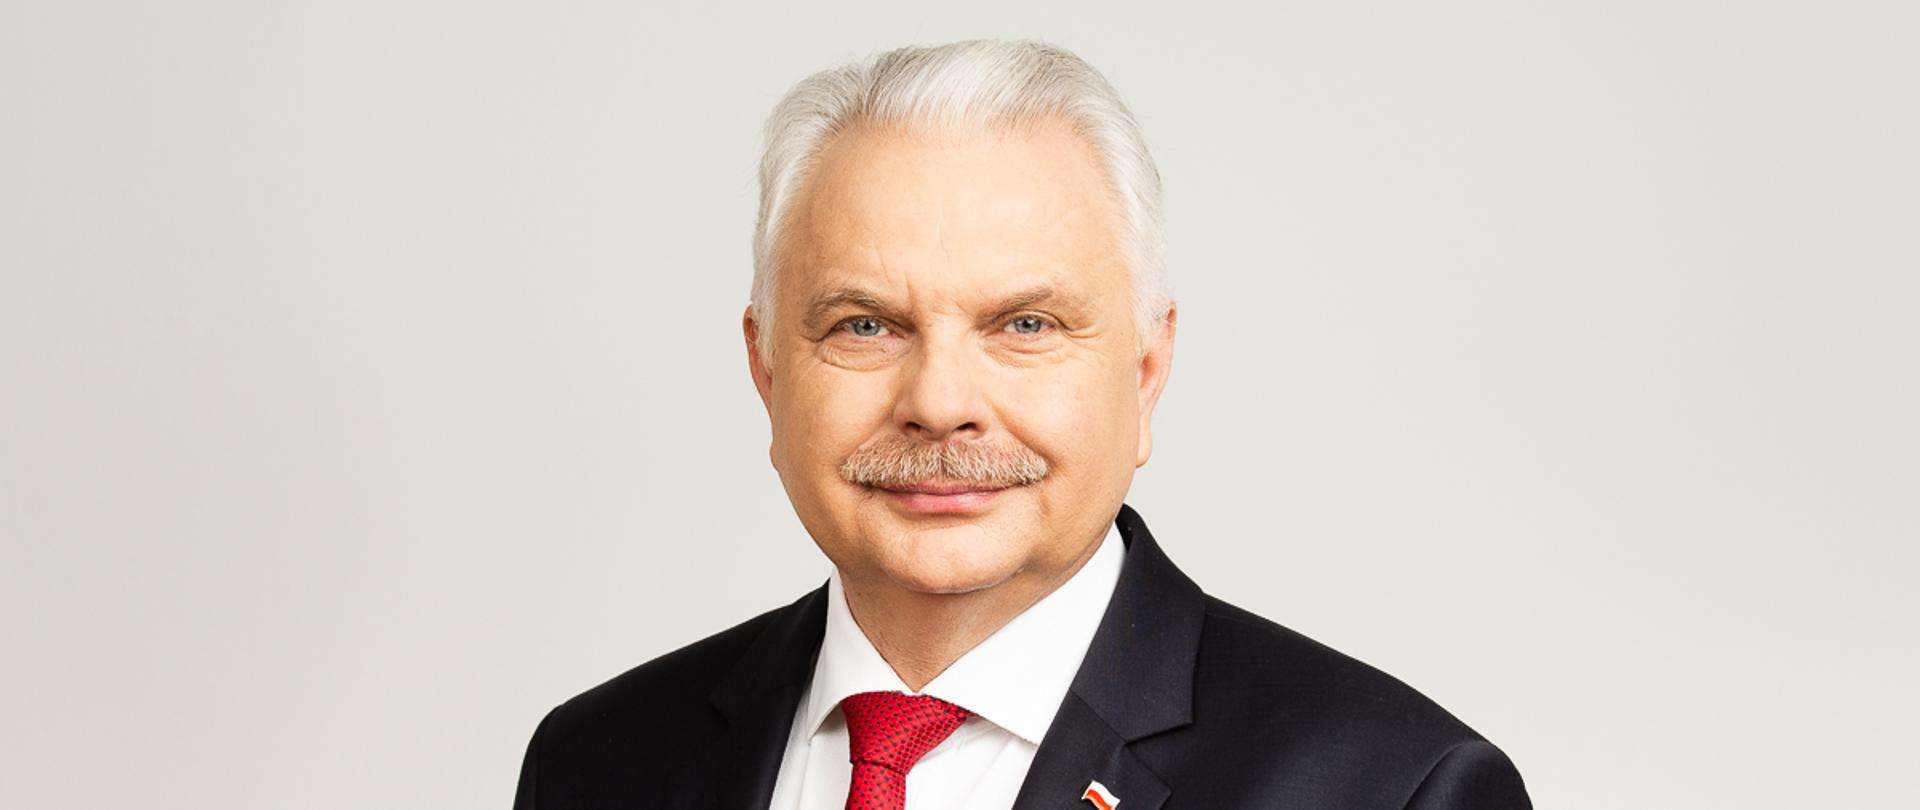 gov.pl